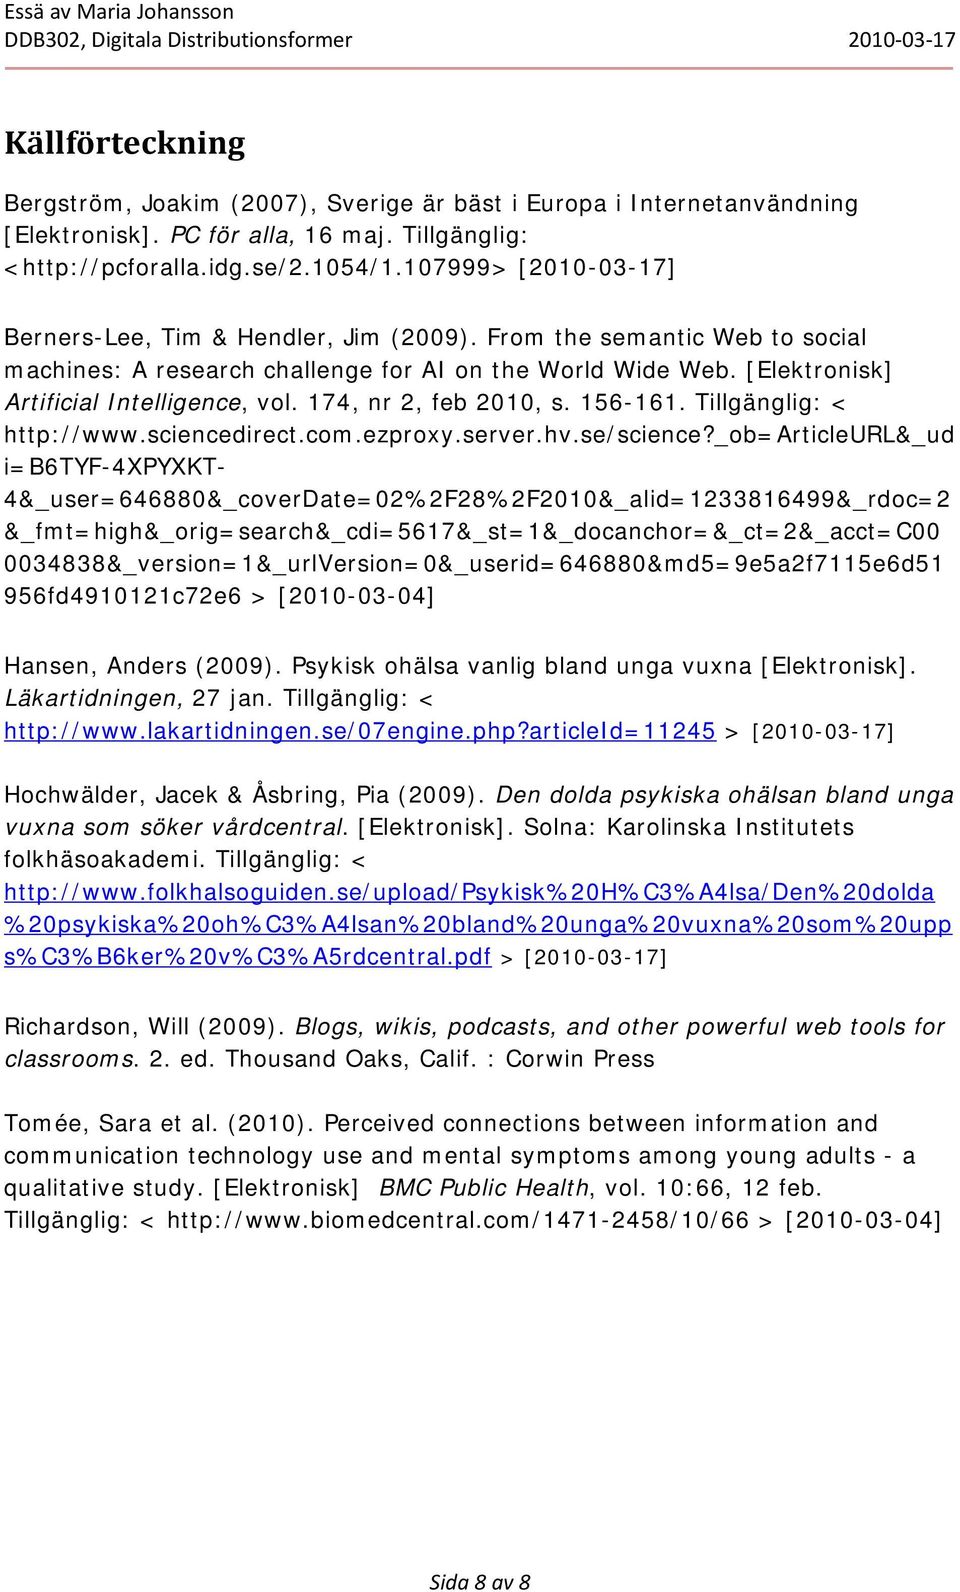 174, nr 2, feb 2010, s. 156-161. Tillgänglig: < http://www.sciencedirect.com.ezproxy.server.hv.se/science?